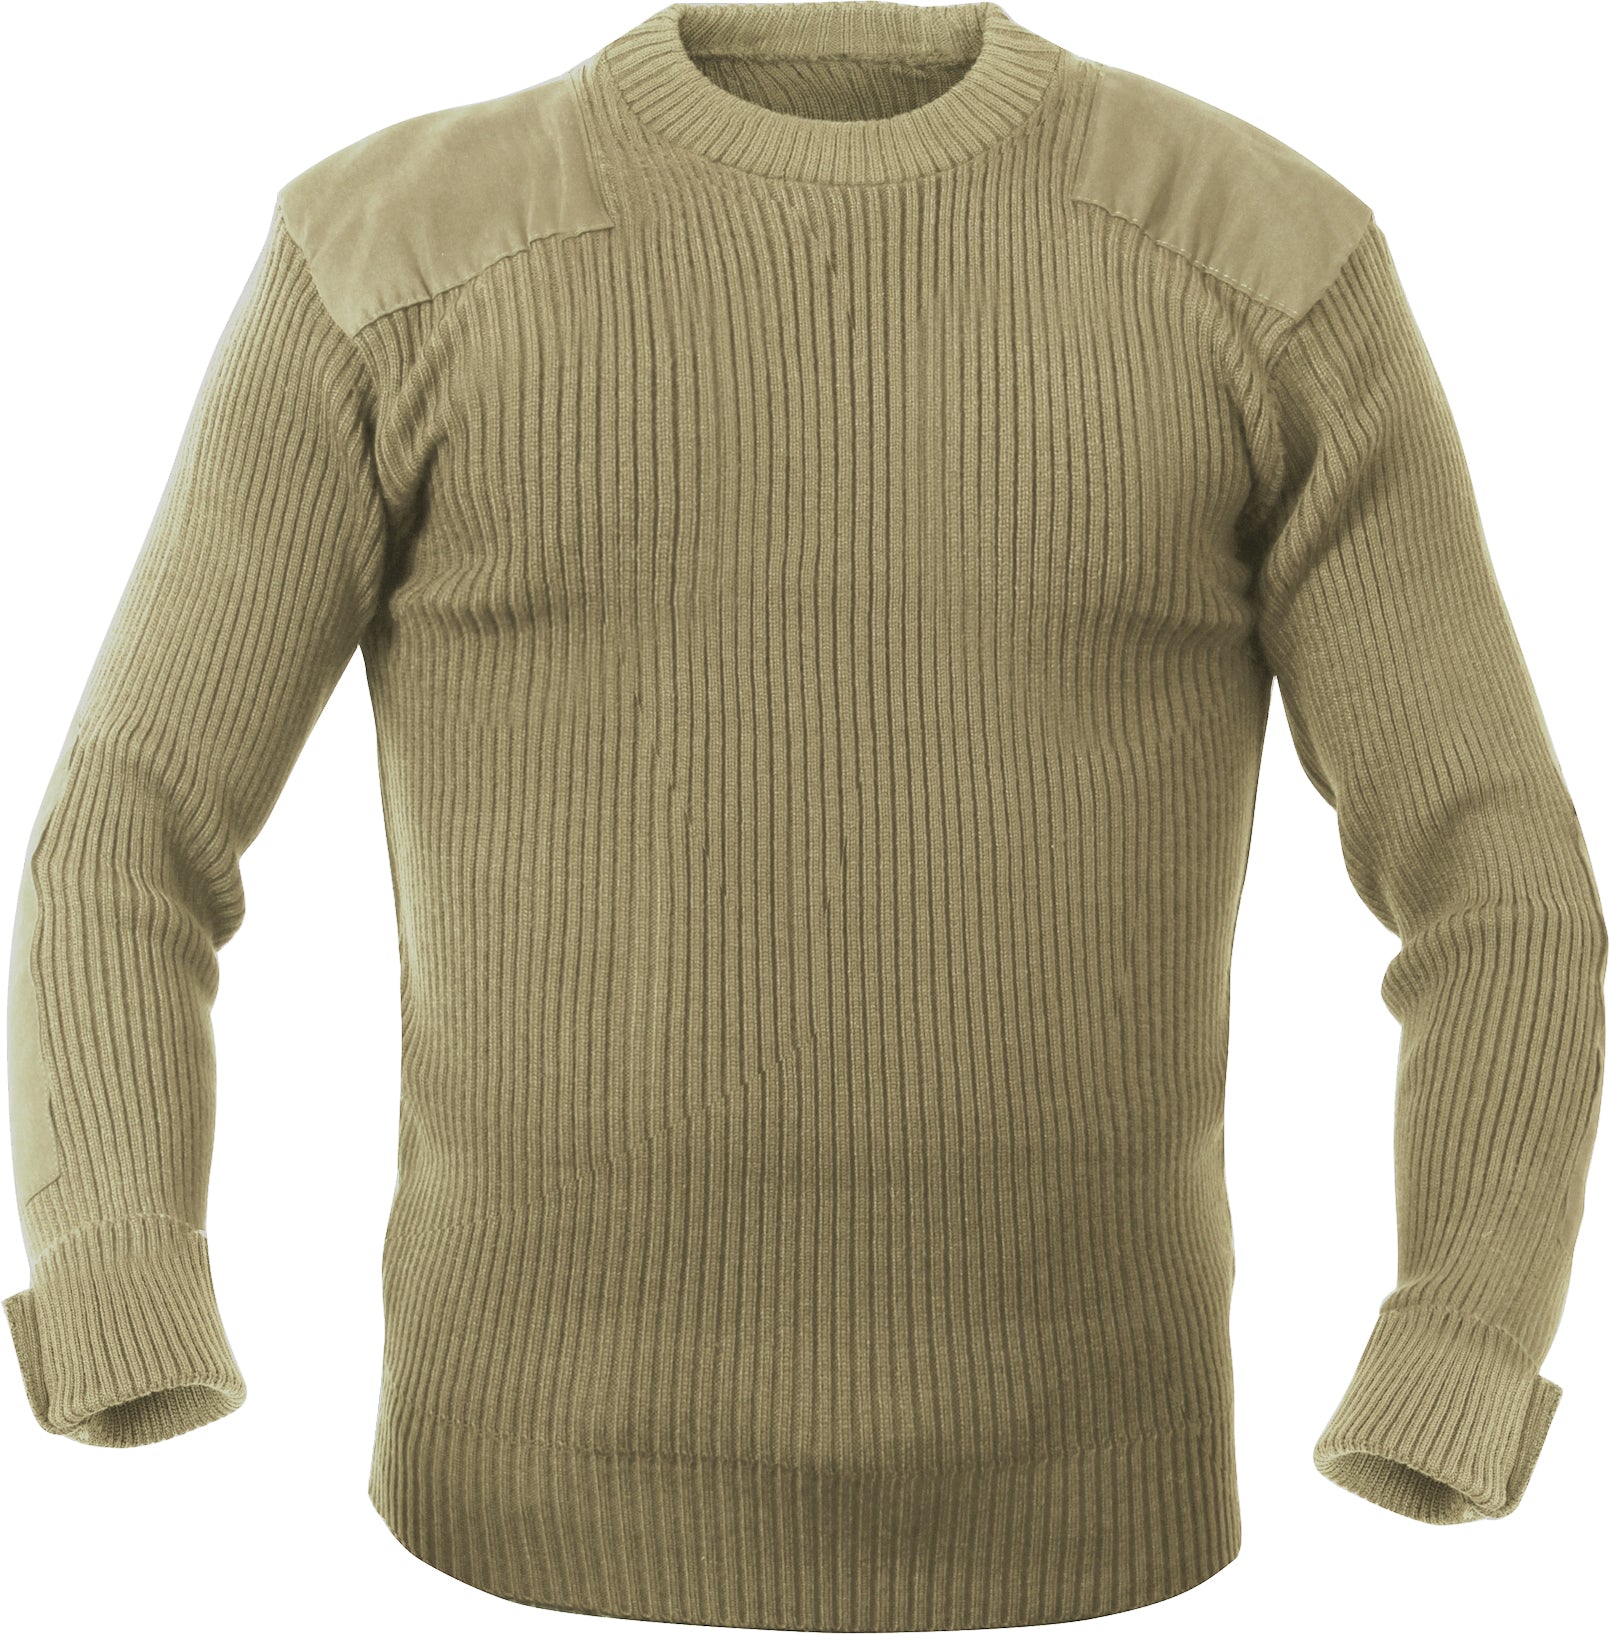 Khaki - Military Style Commando Acrylic Crewneck Sweater